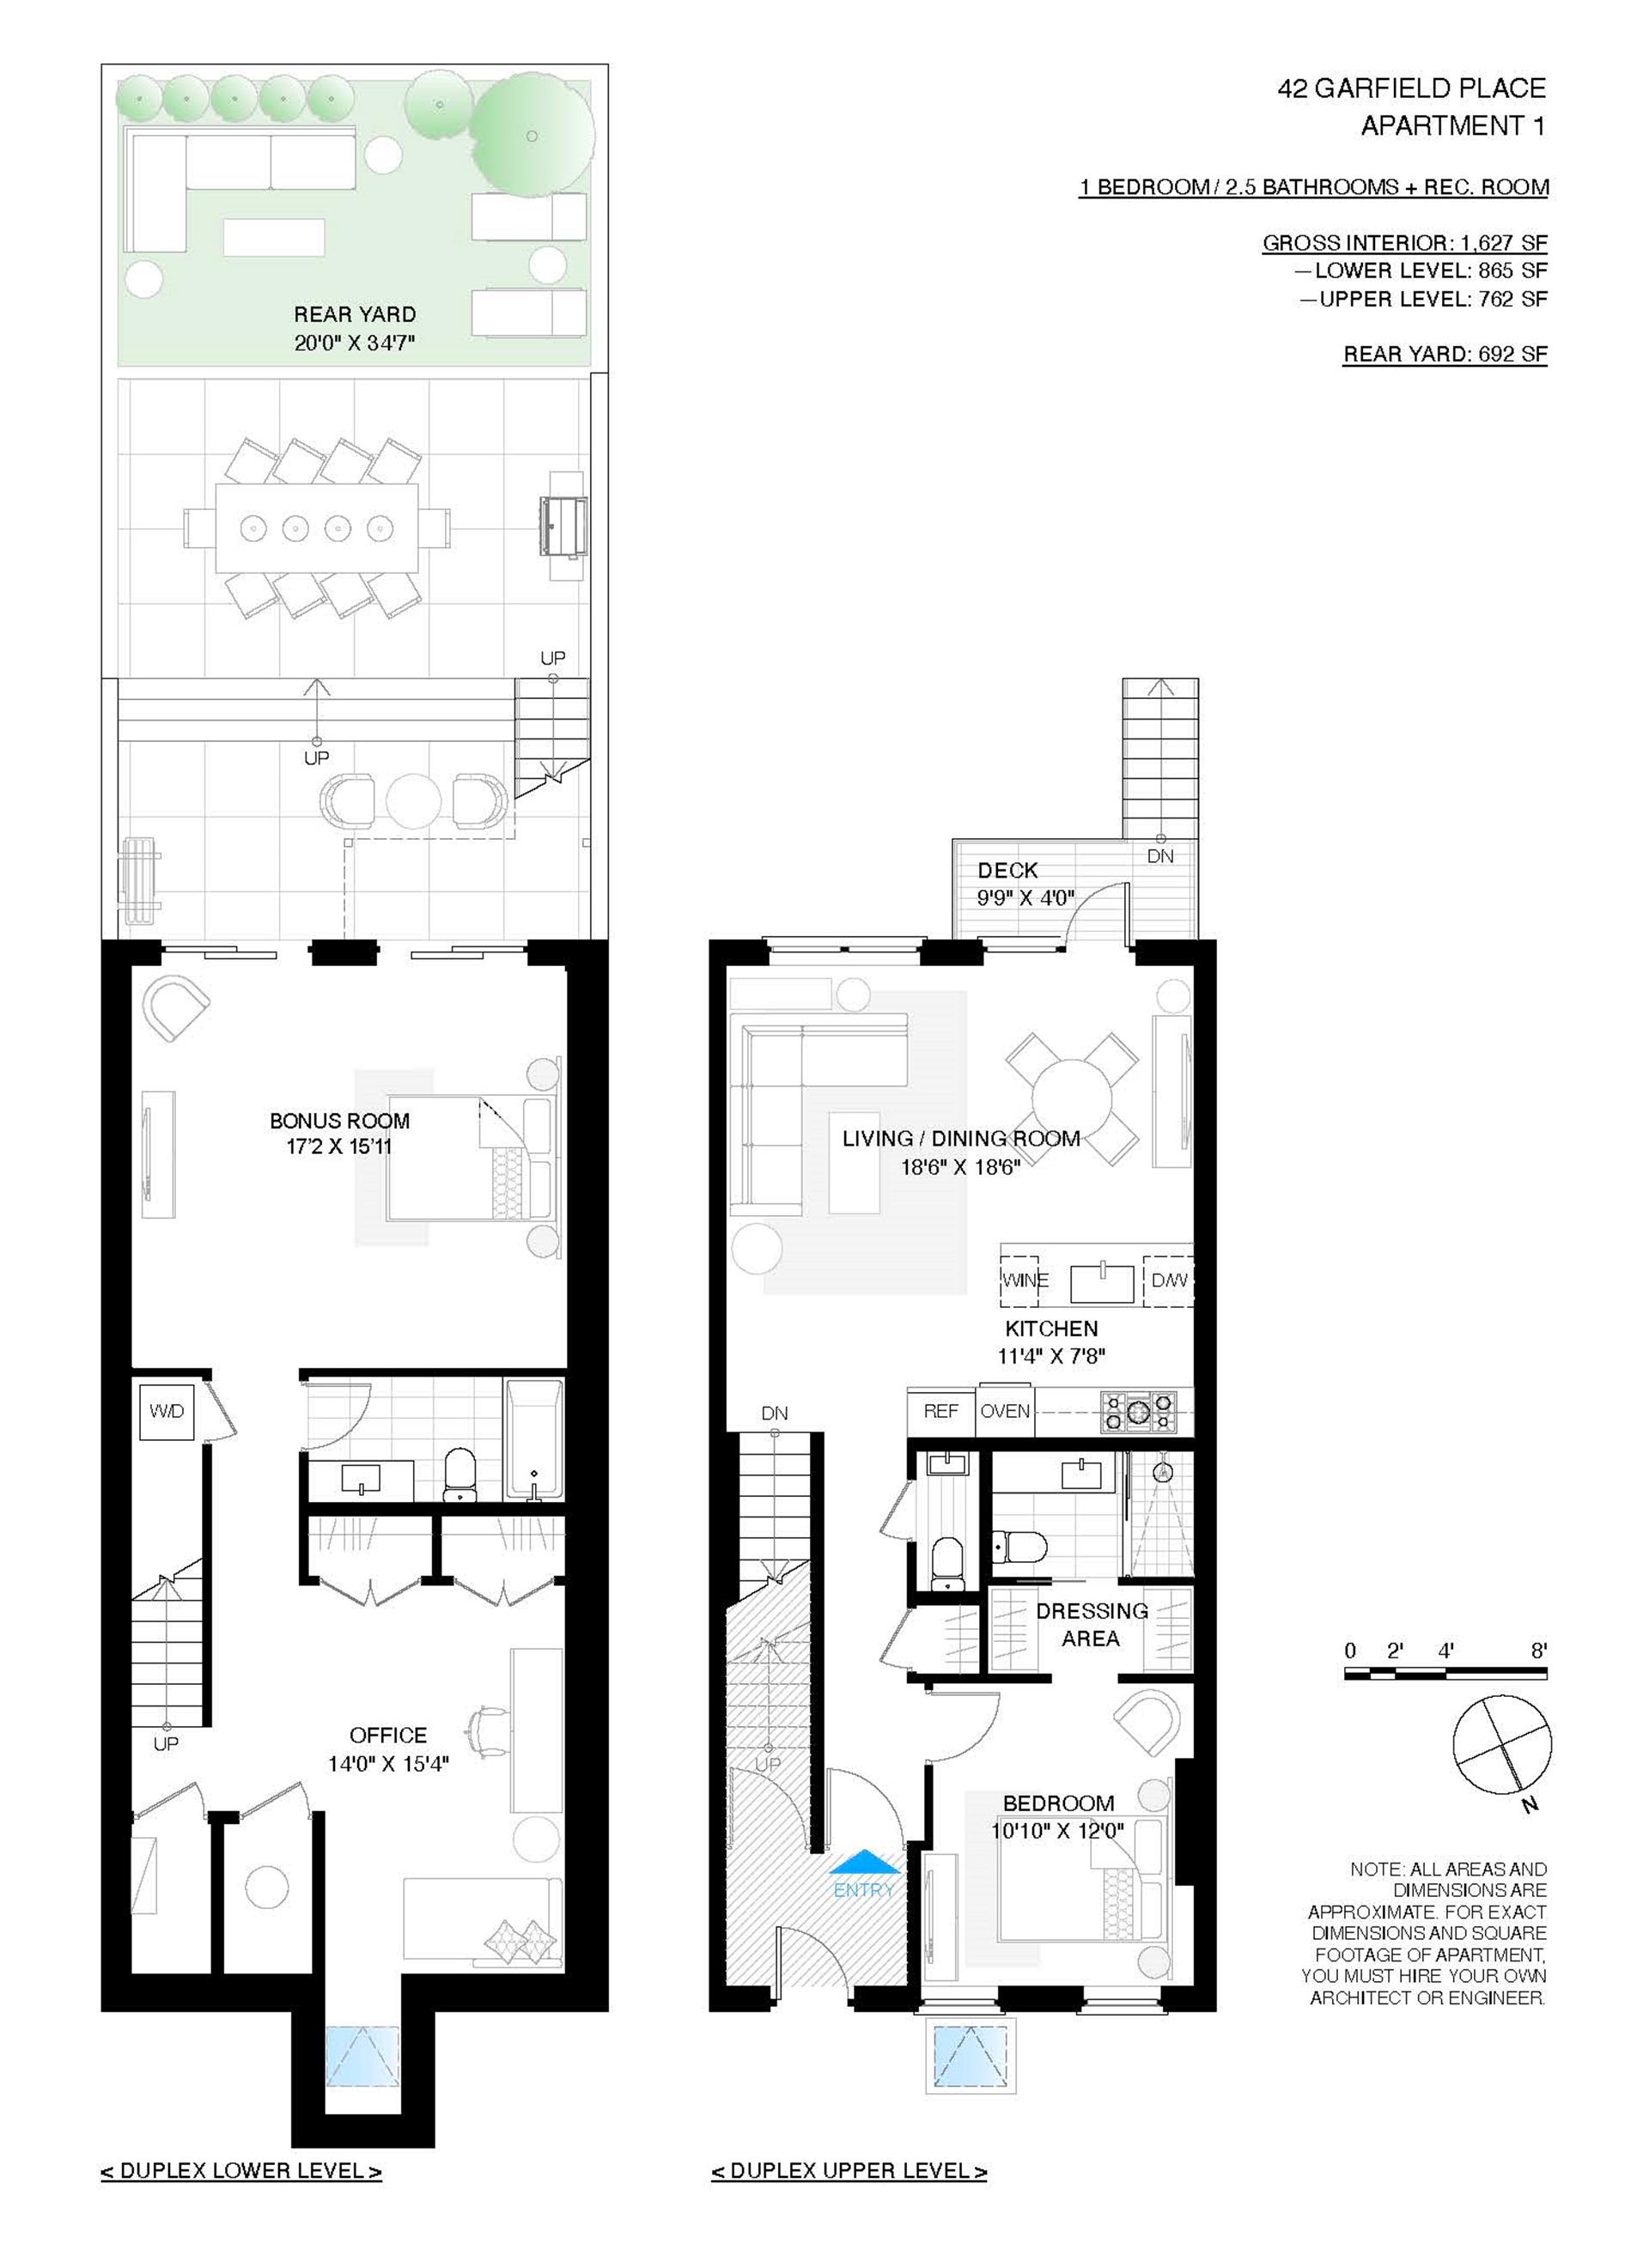 Floorplan for 42 Garfield Place, 1